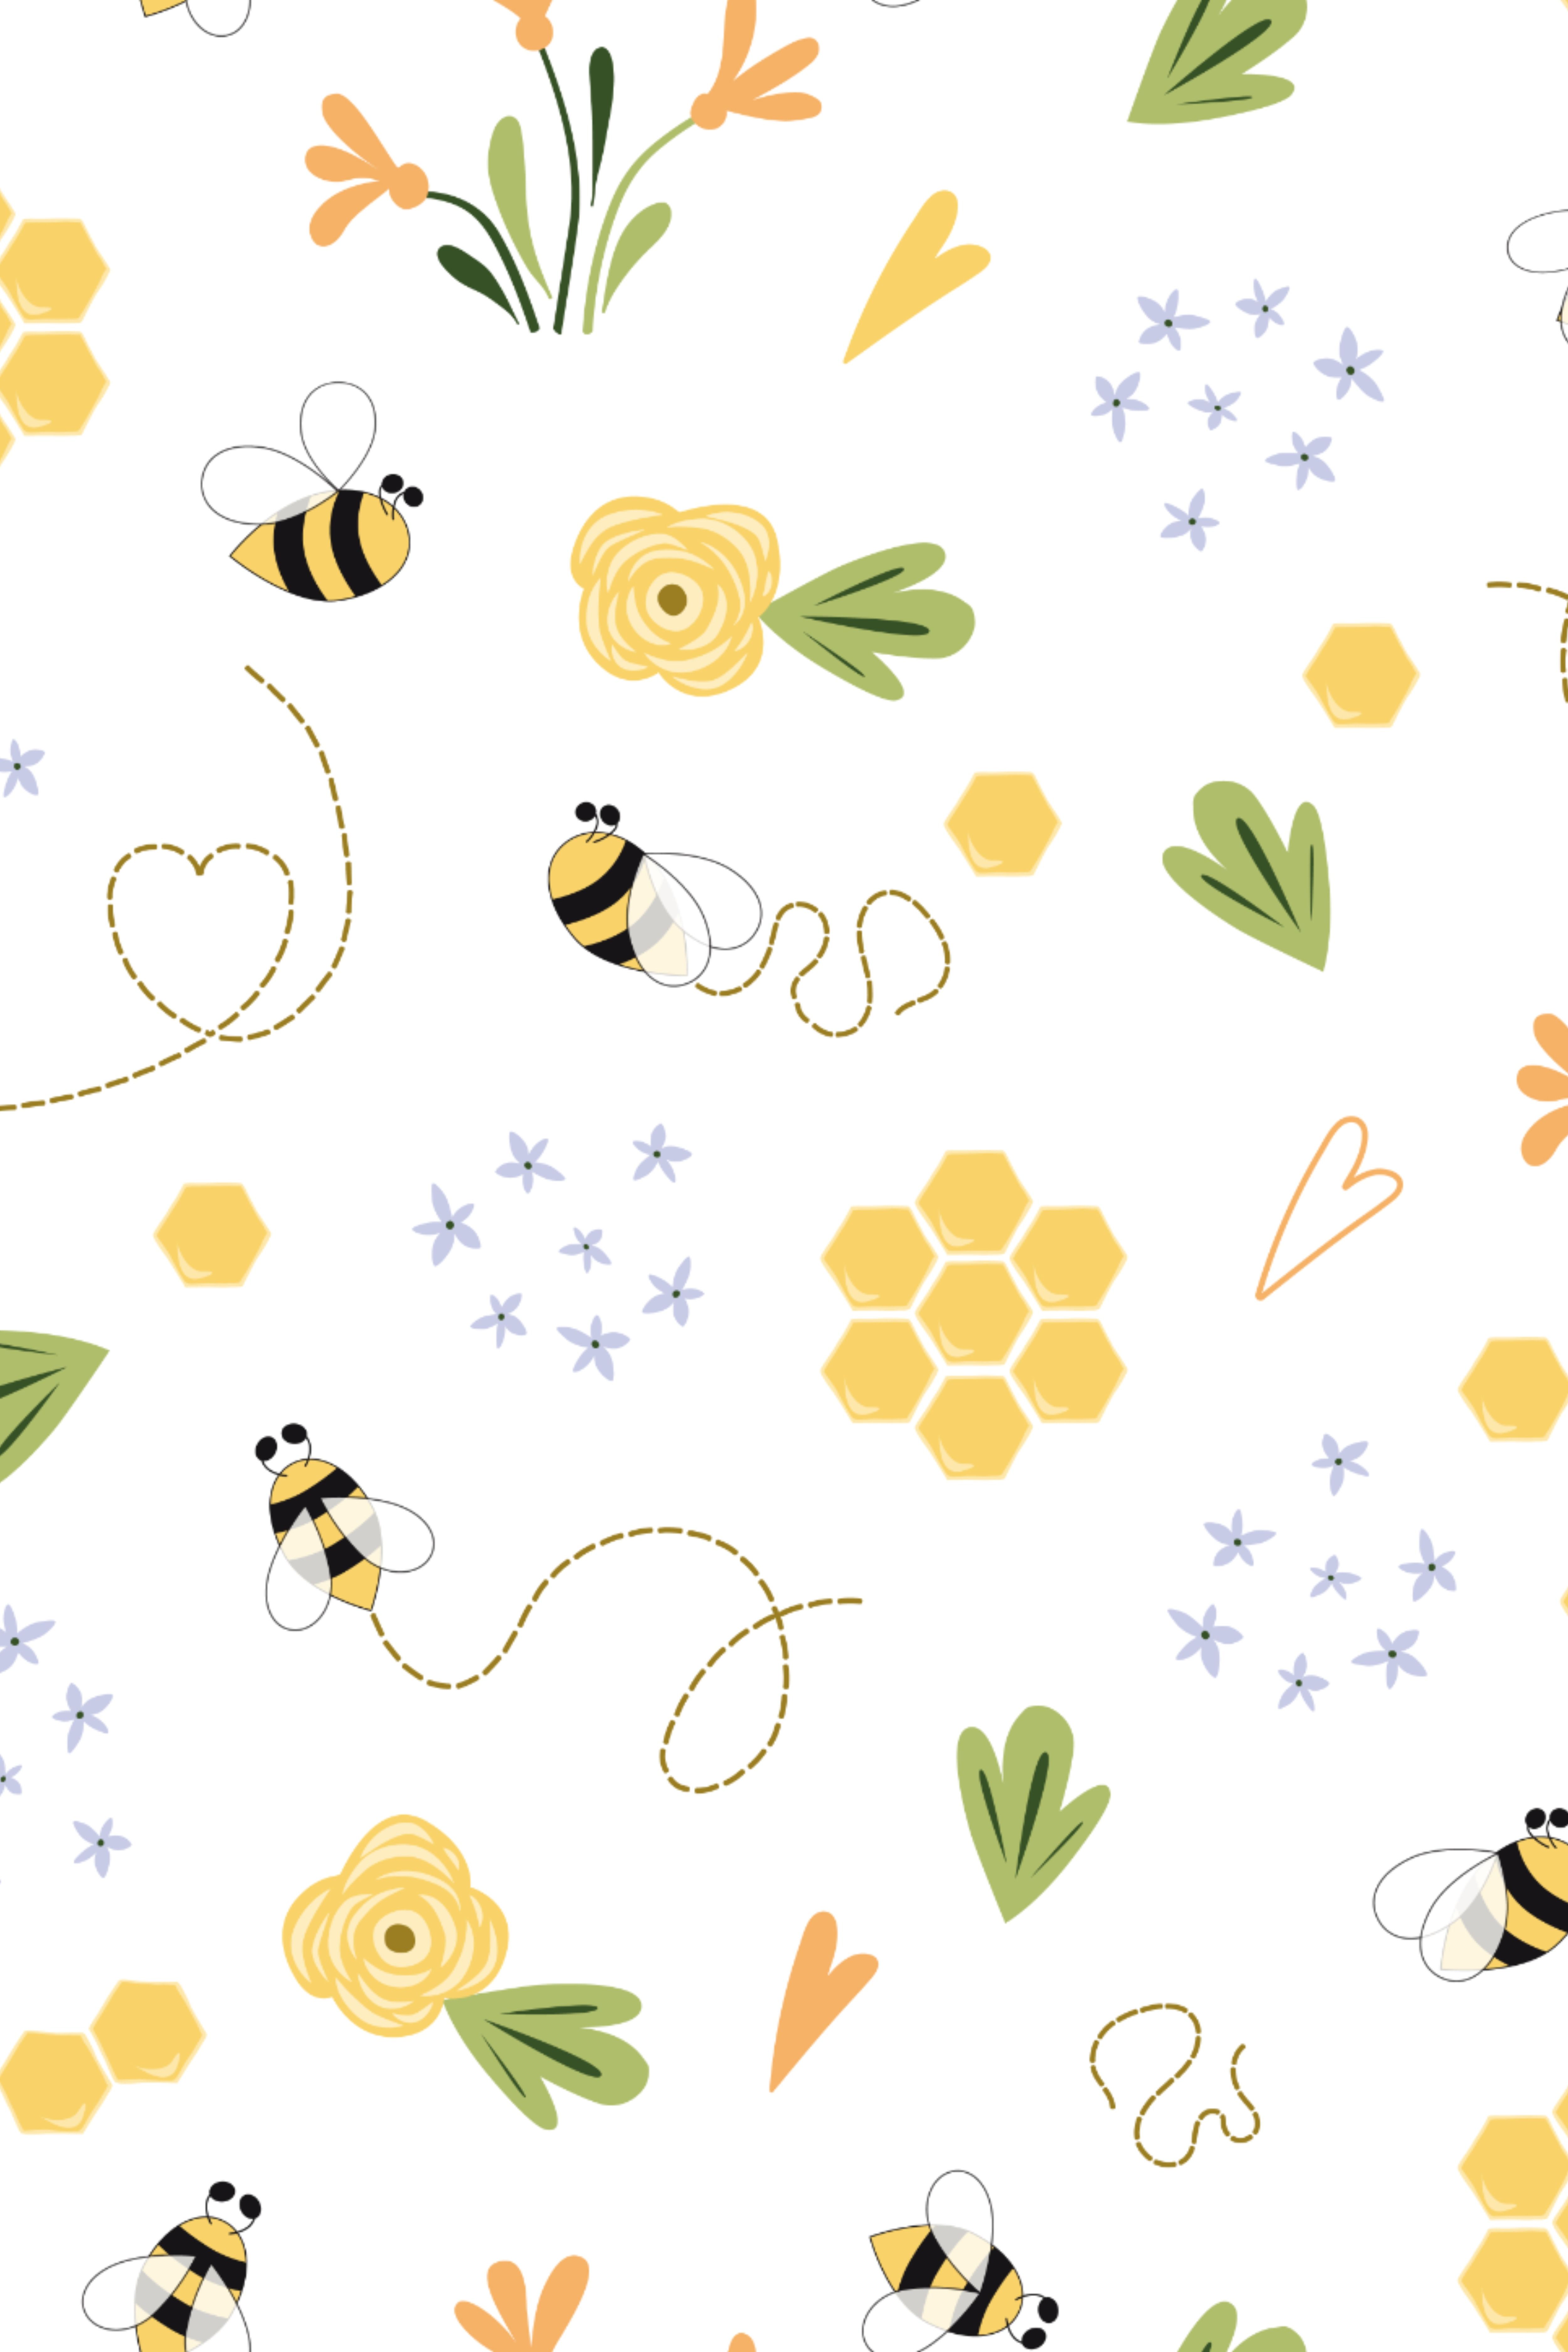 Honey Bee patterns Cute Bee. iPhone background wallpaper, Pretty wallpaper, Aesthetic iphone wallpaper